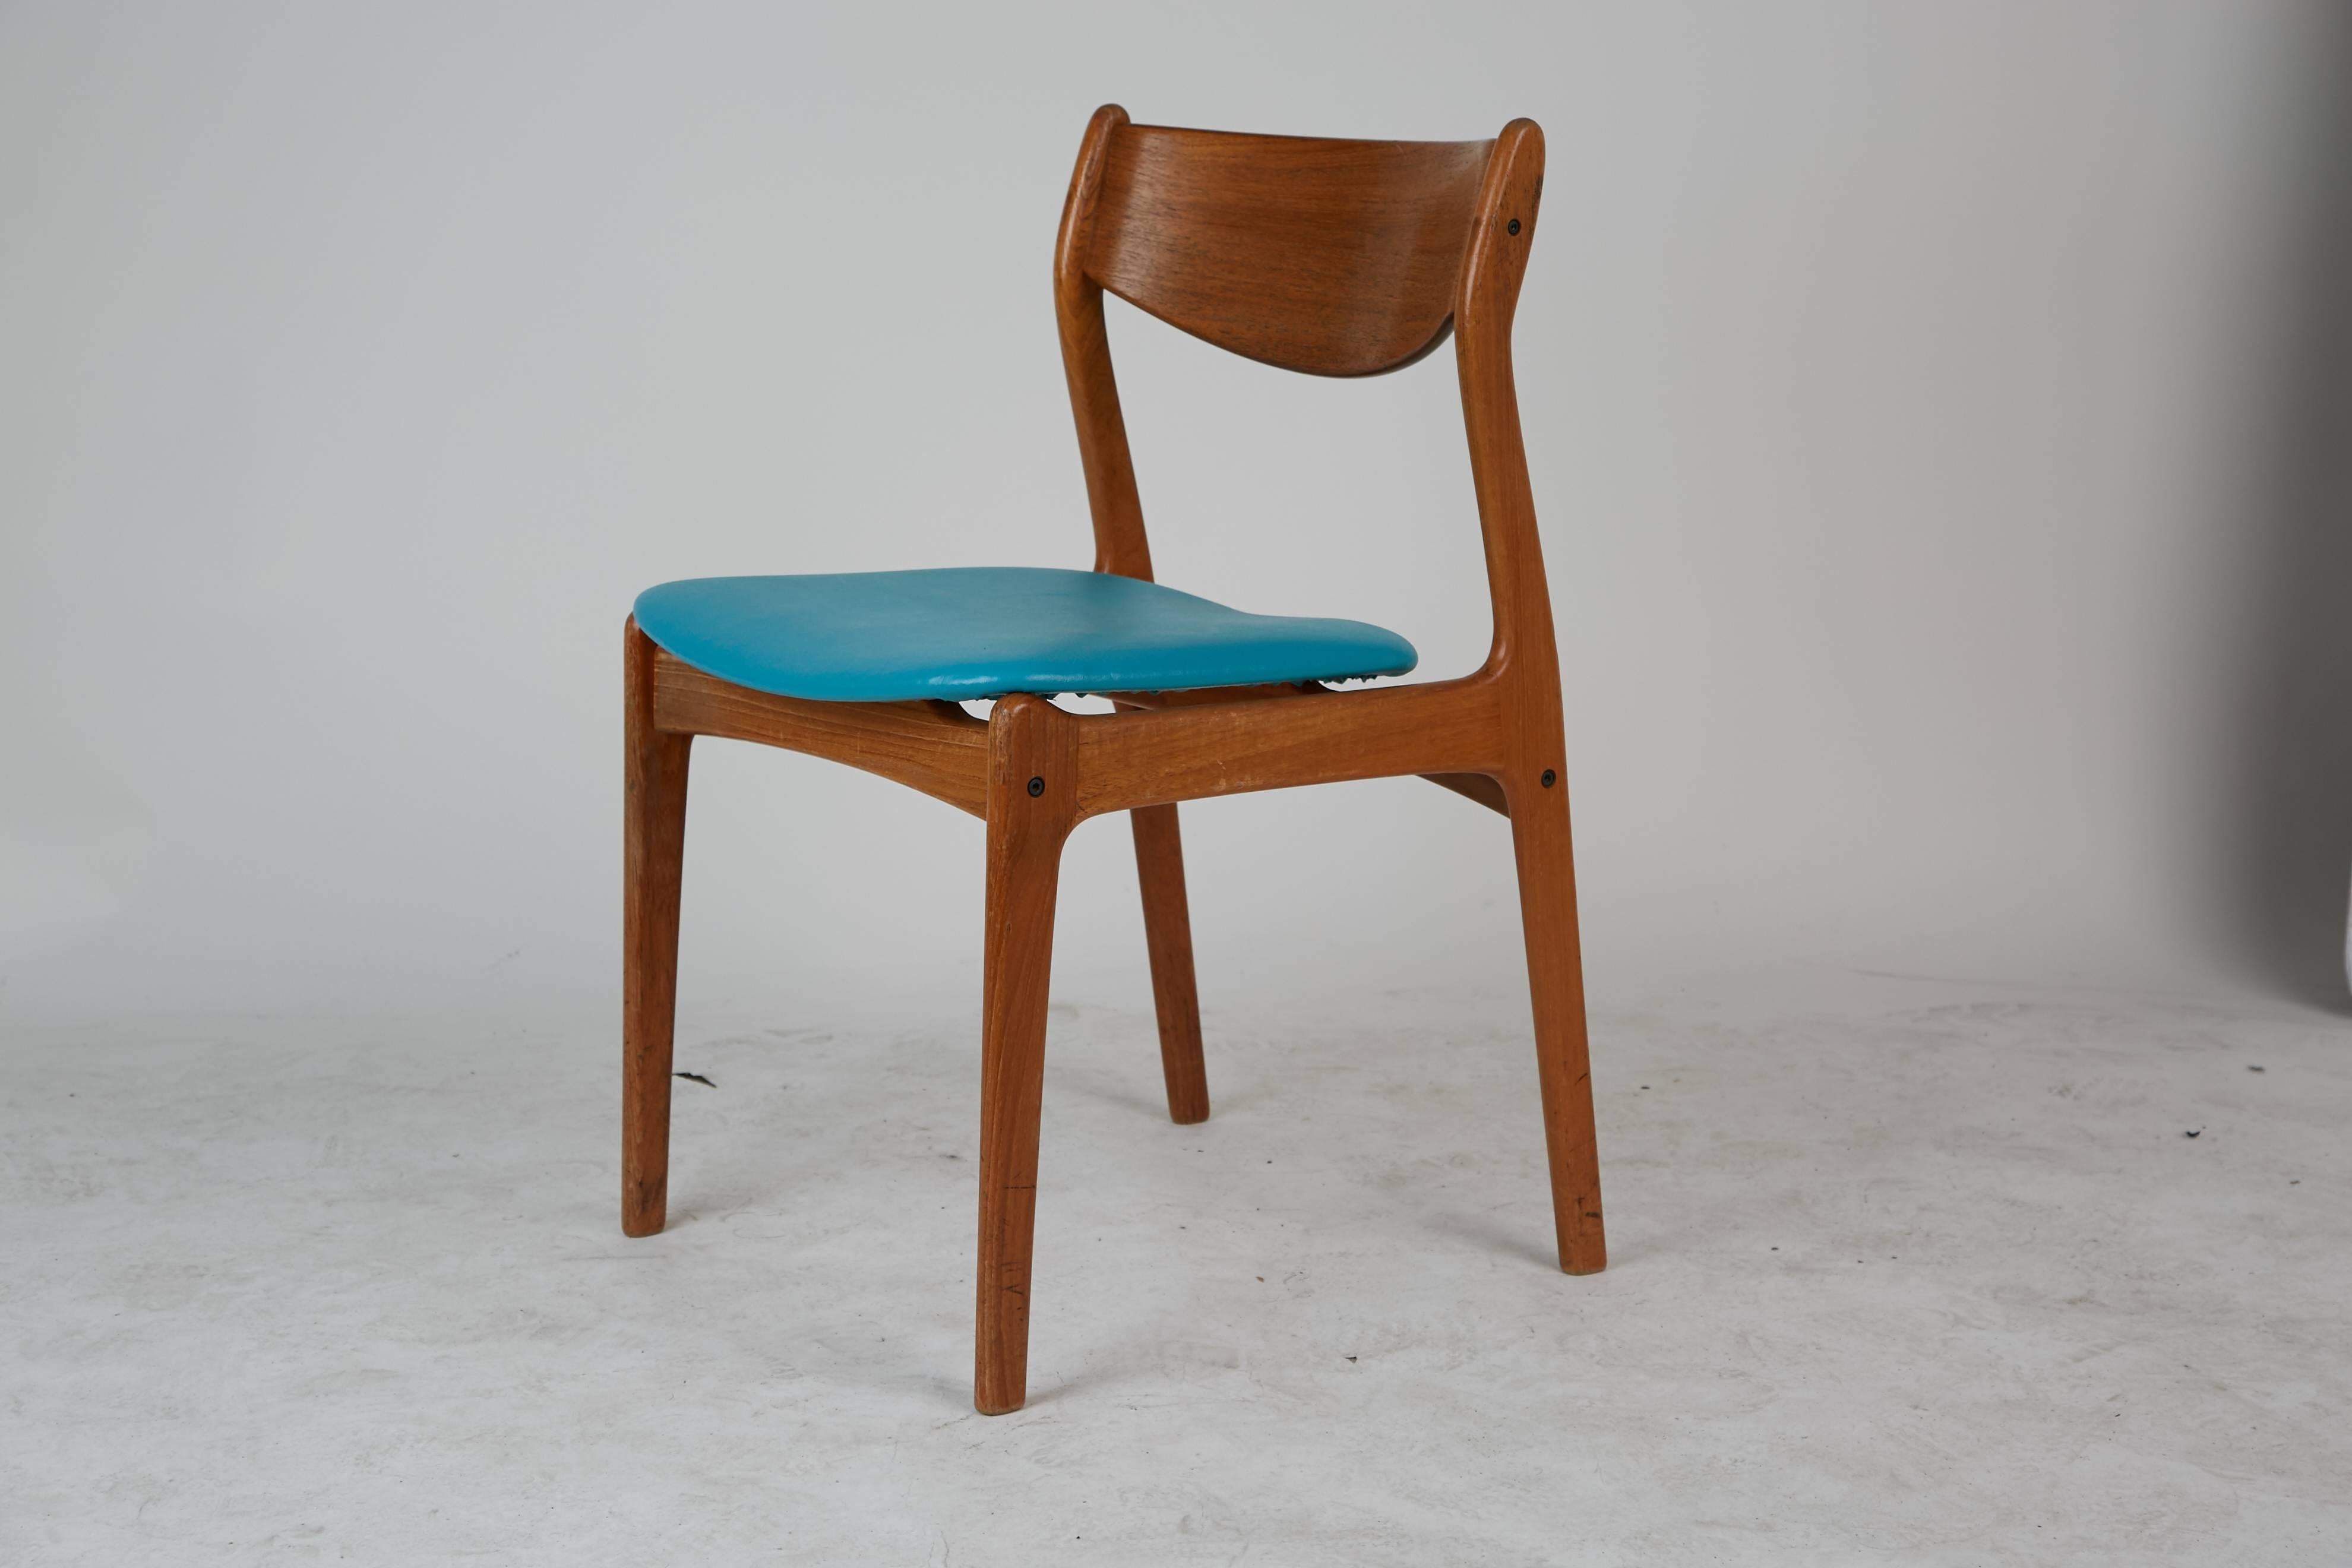 Scandinavian Modern Danish Modern Teak Side Chair with Teal Upholstery, Circa 1960